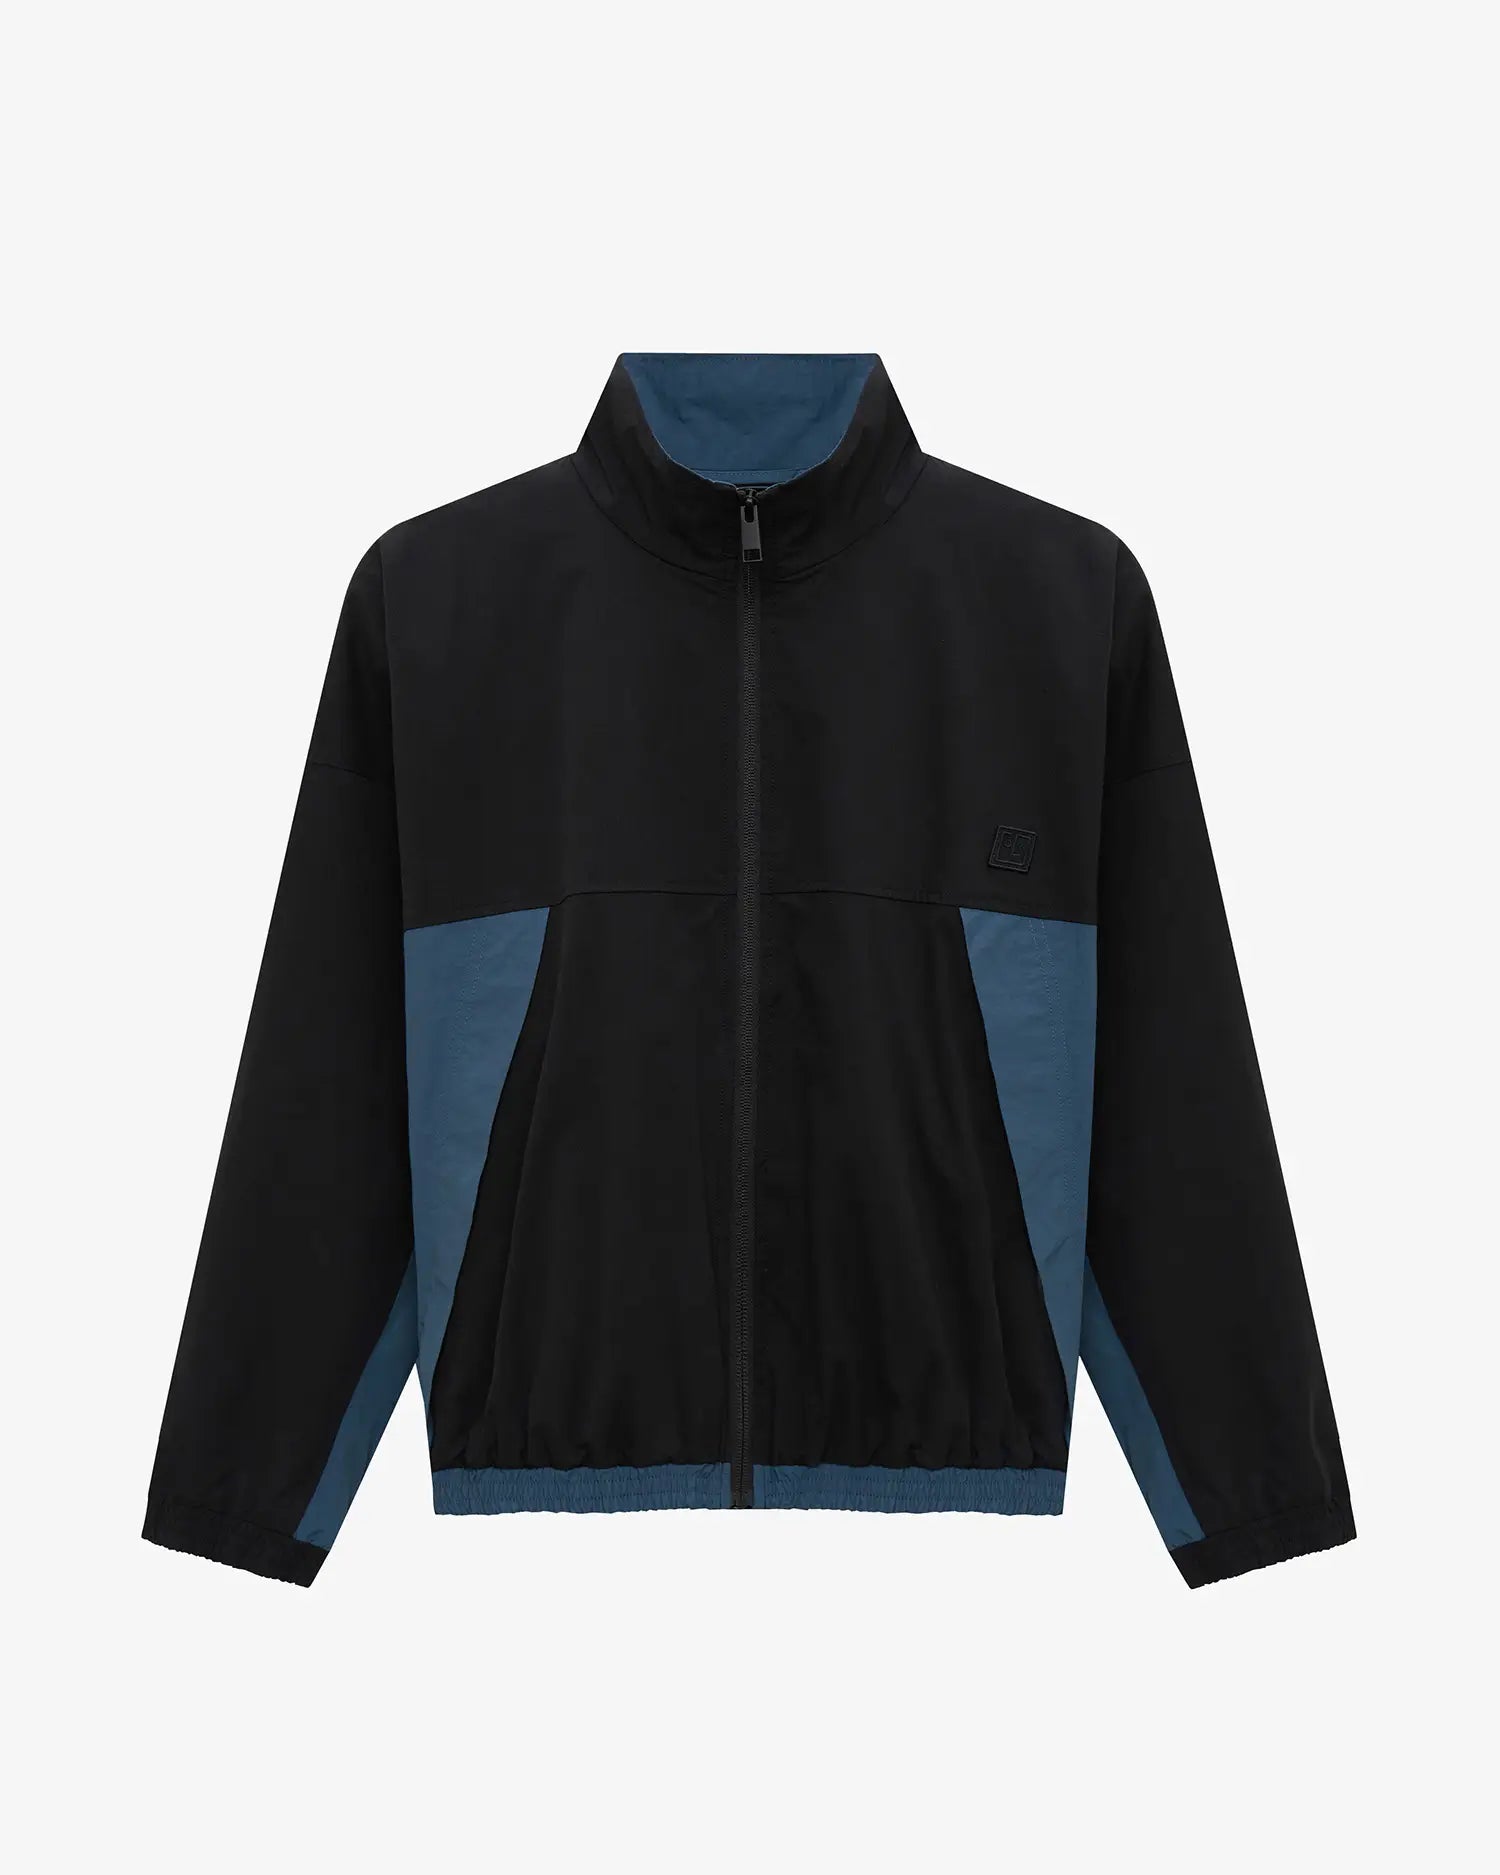 Women's Cropped Track Jacket in Blue & Black 01 #blue-black